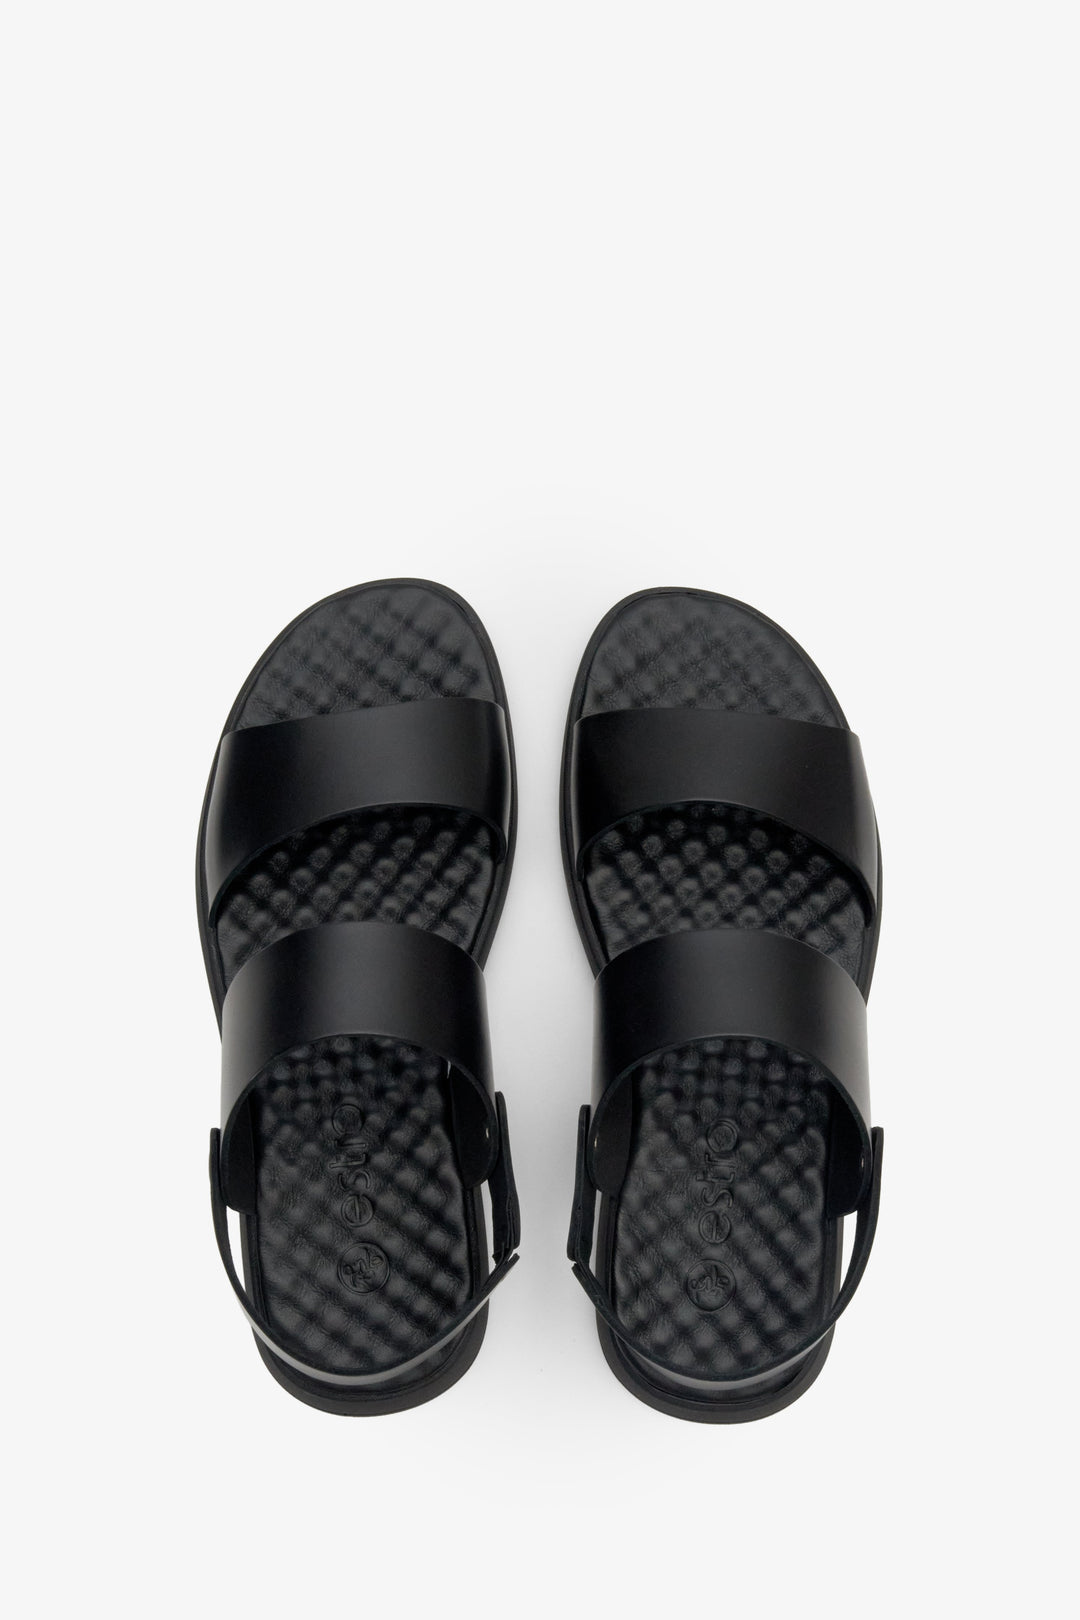 Men's black summer sandals made of genuine leather, Estro brand - top view model presentation.